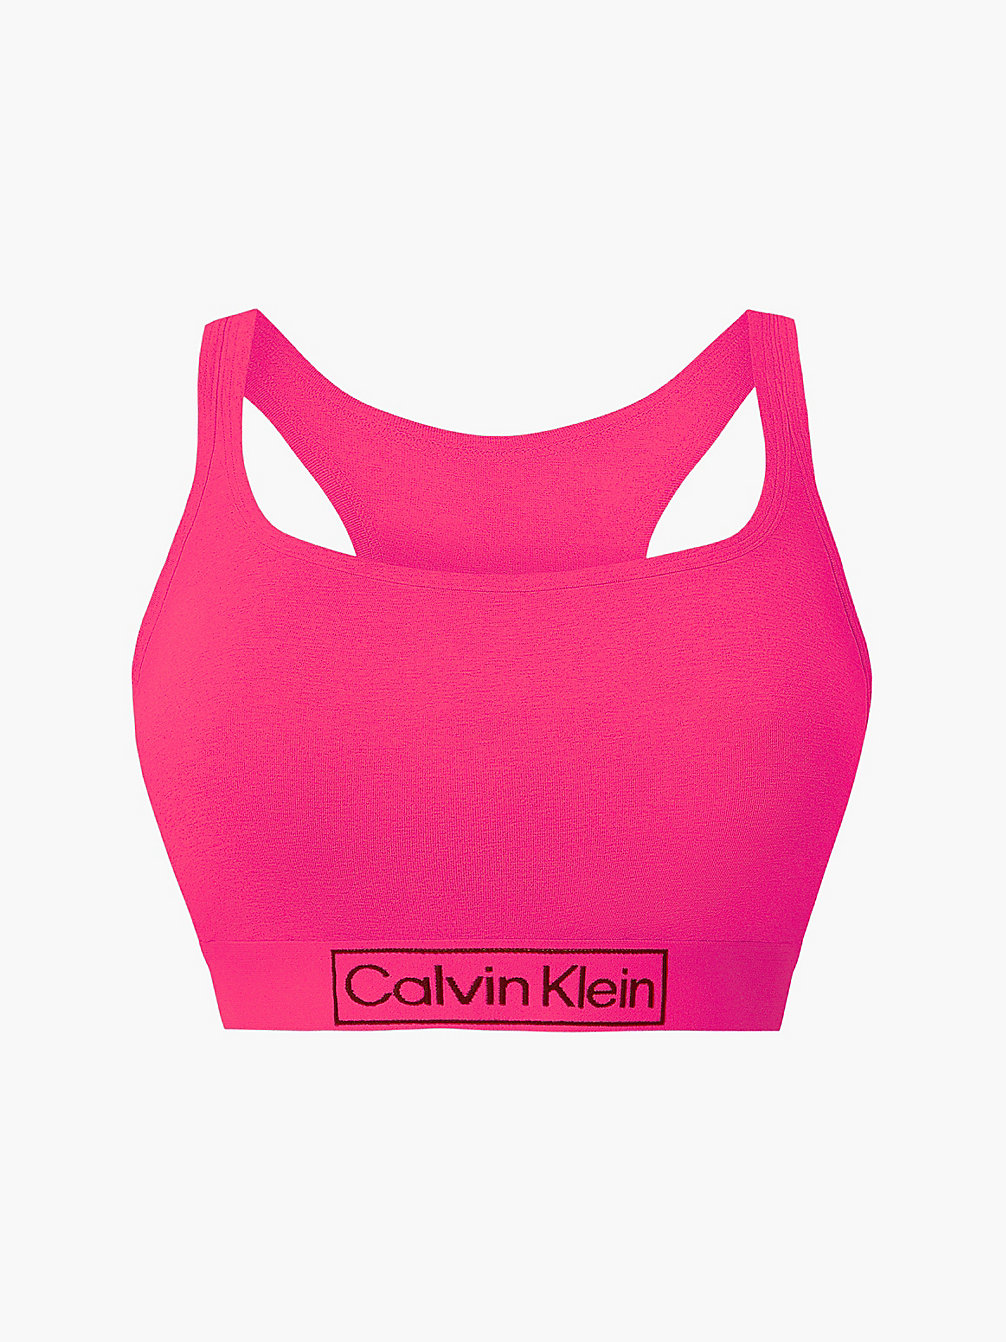 PINK SPLENDOR Plus Size Bralette - Reimagined Heritage undefined women Calvin Klein